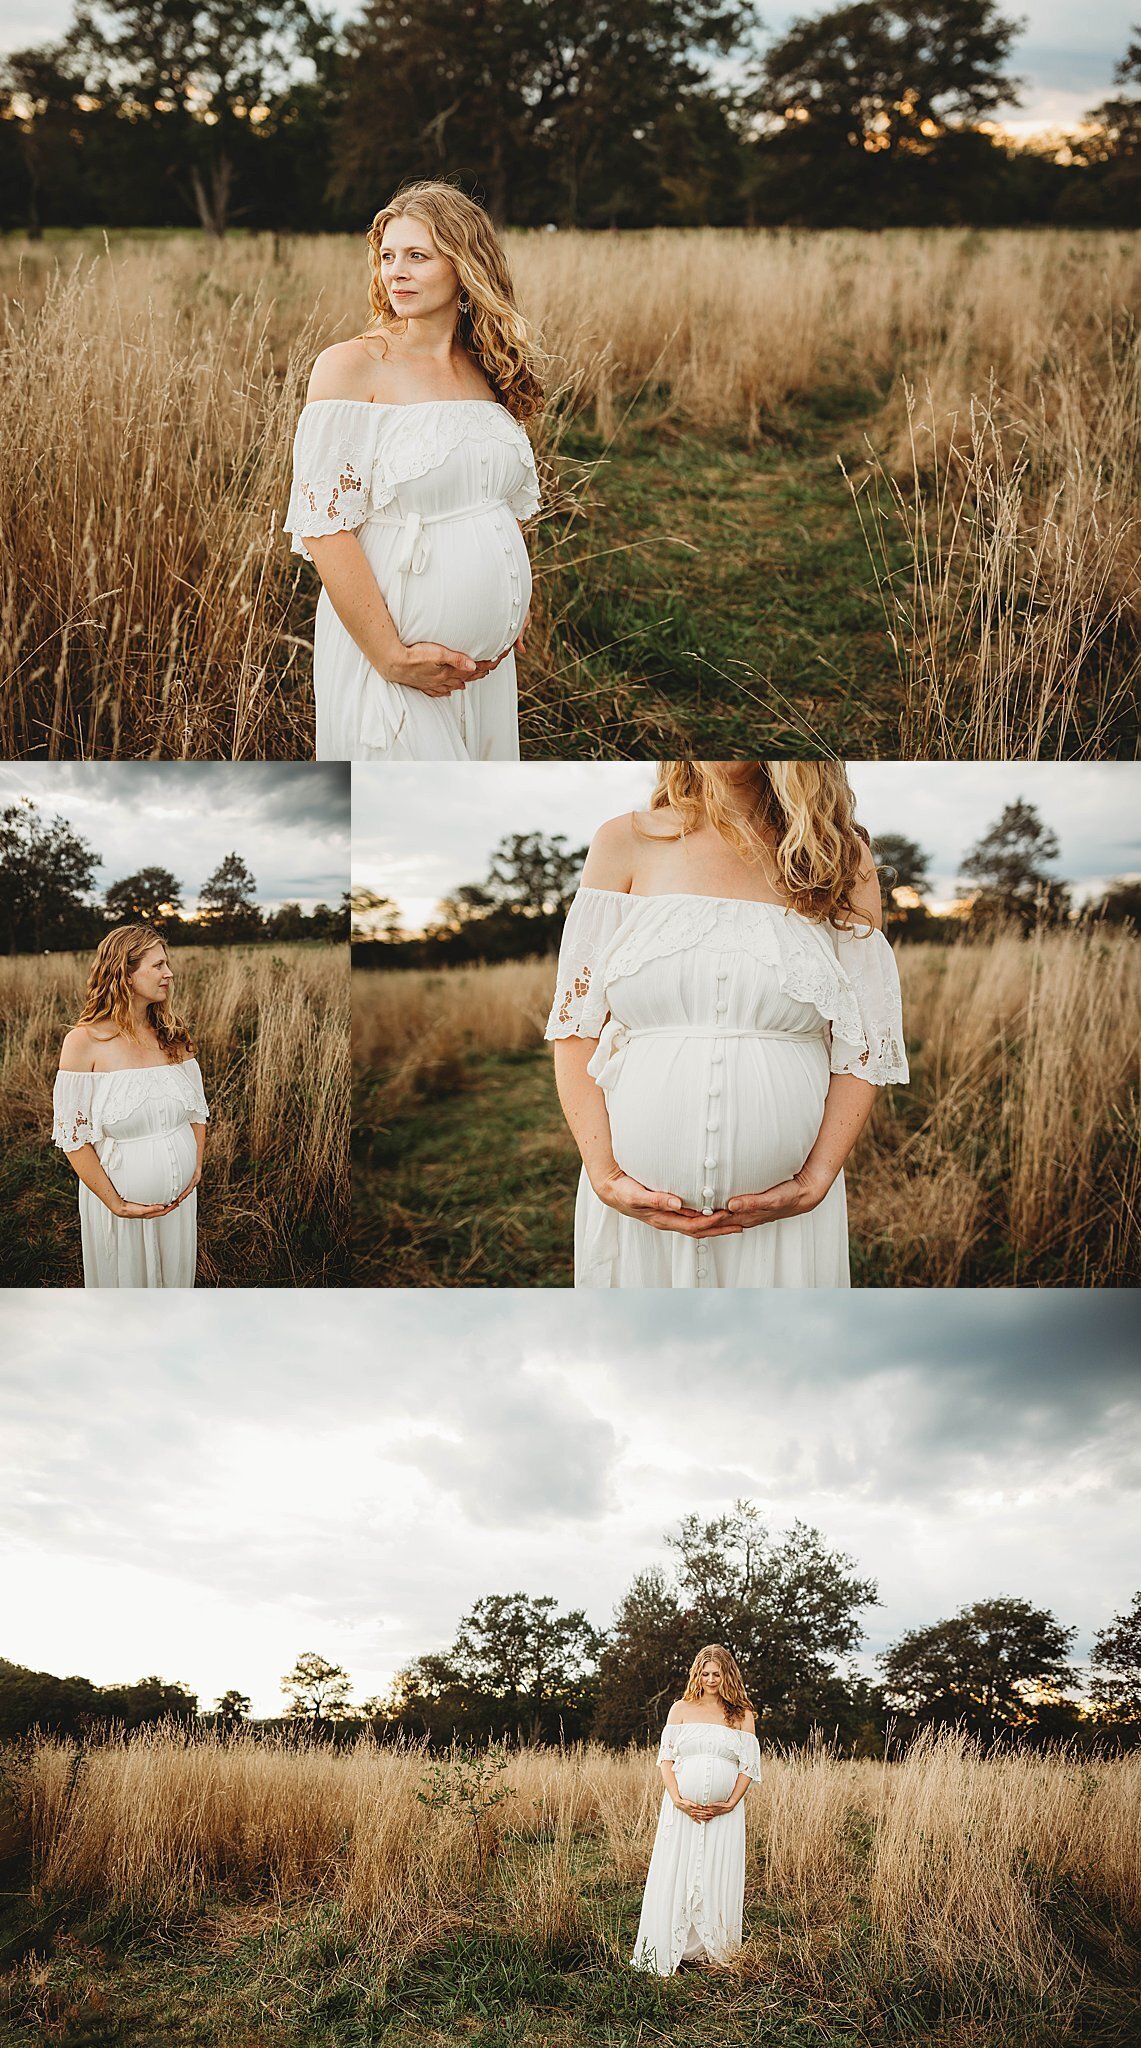 Stefanie-Cole-Photography-Waveny-Park-Maternity-Session.jpeg